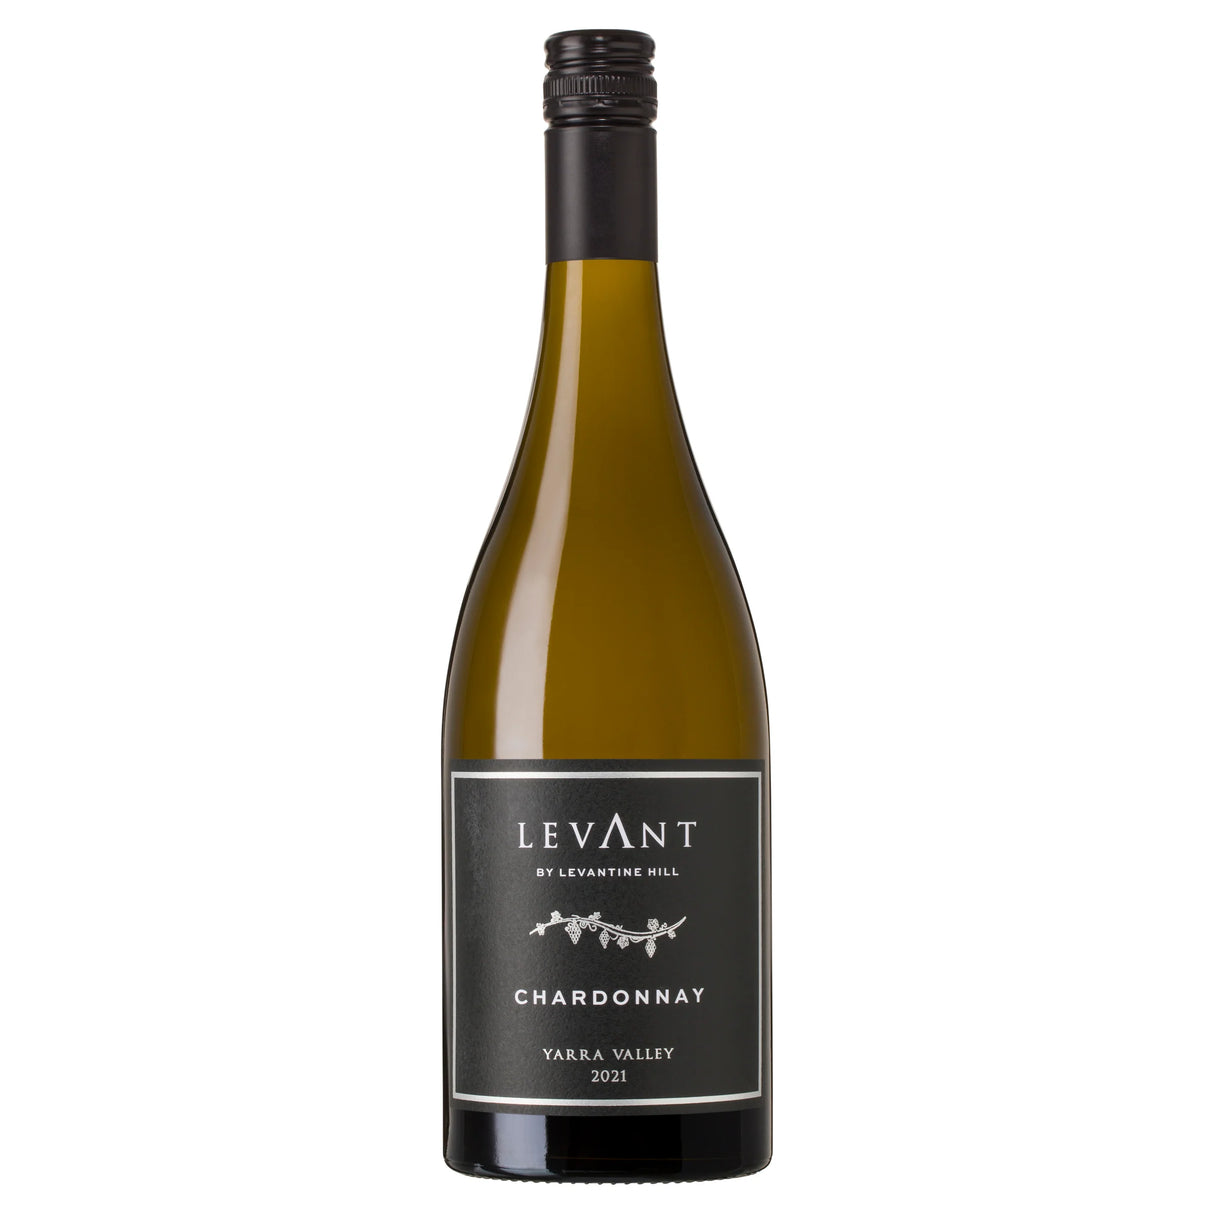 Levant by Levantine Hill Chardonnay, Yarra Valley 2021 (6 Bottles)